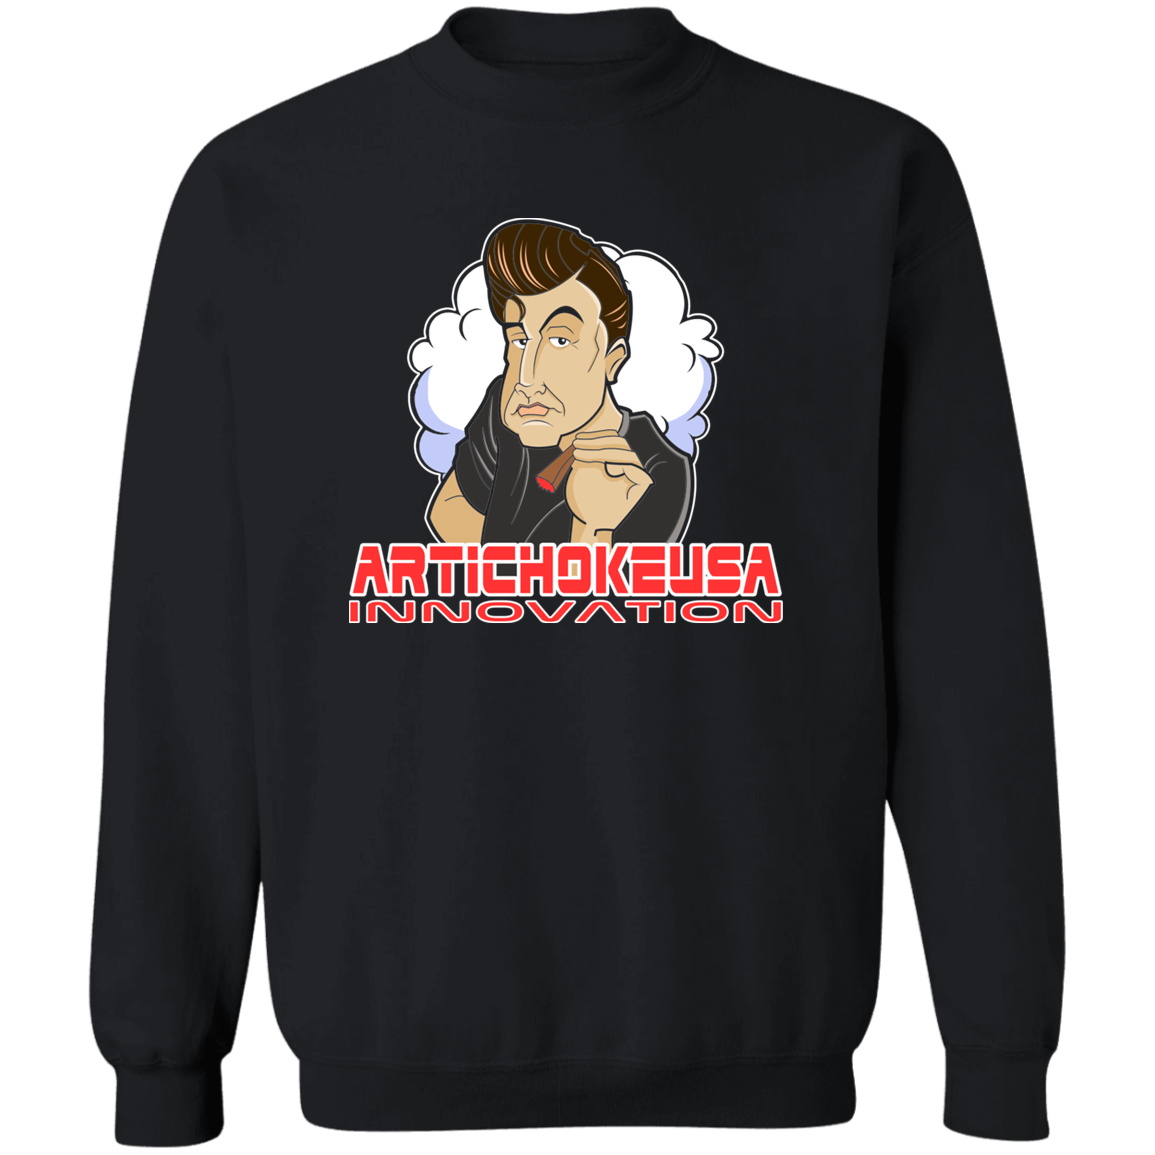 ArtichokeUSA Custom Design. Innovation. Elon Musk Parody Fan Art. Crewneck Pullover Sweatshirt